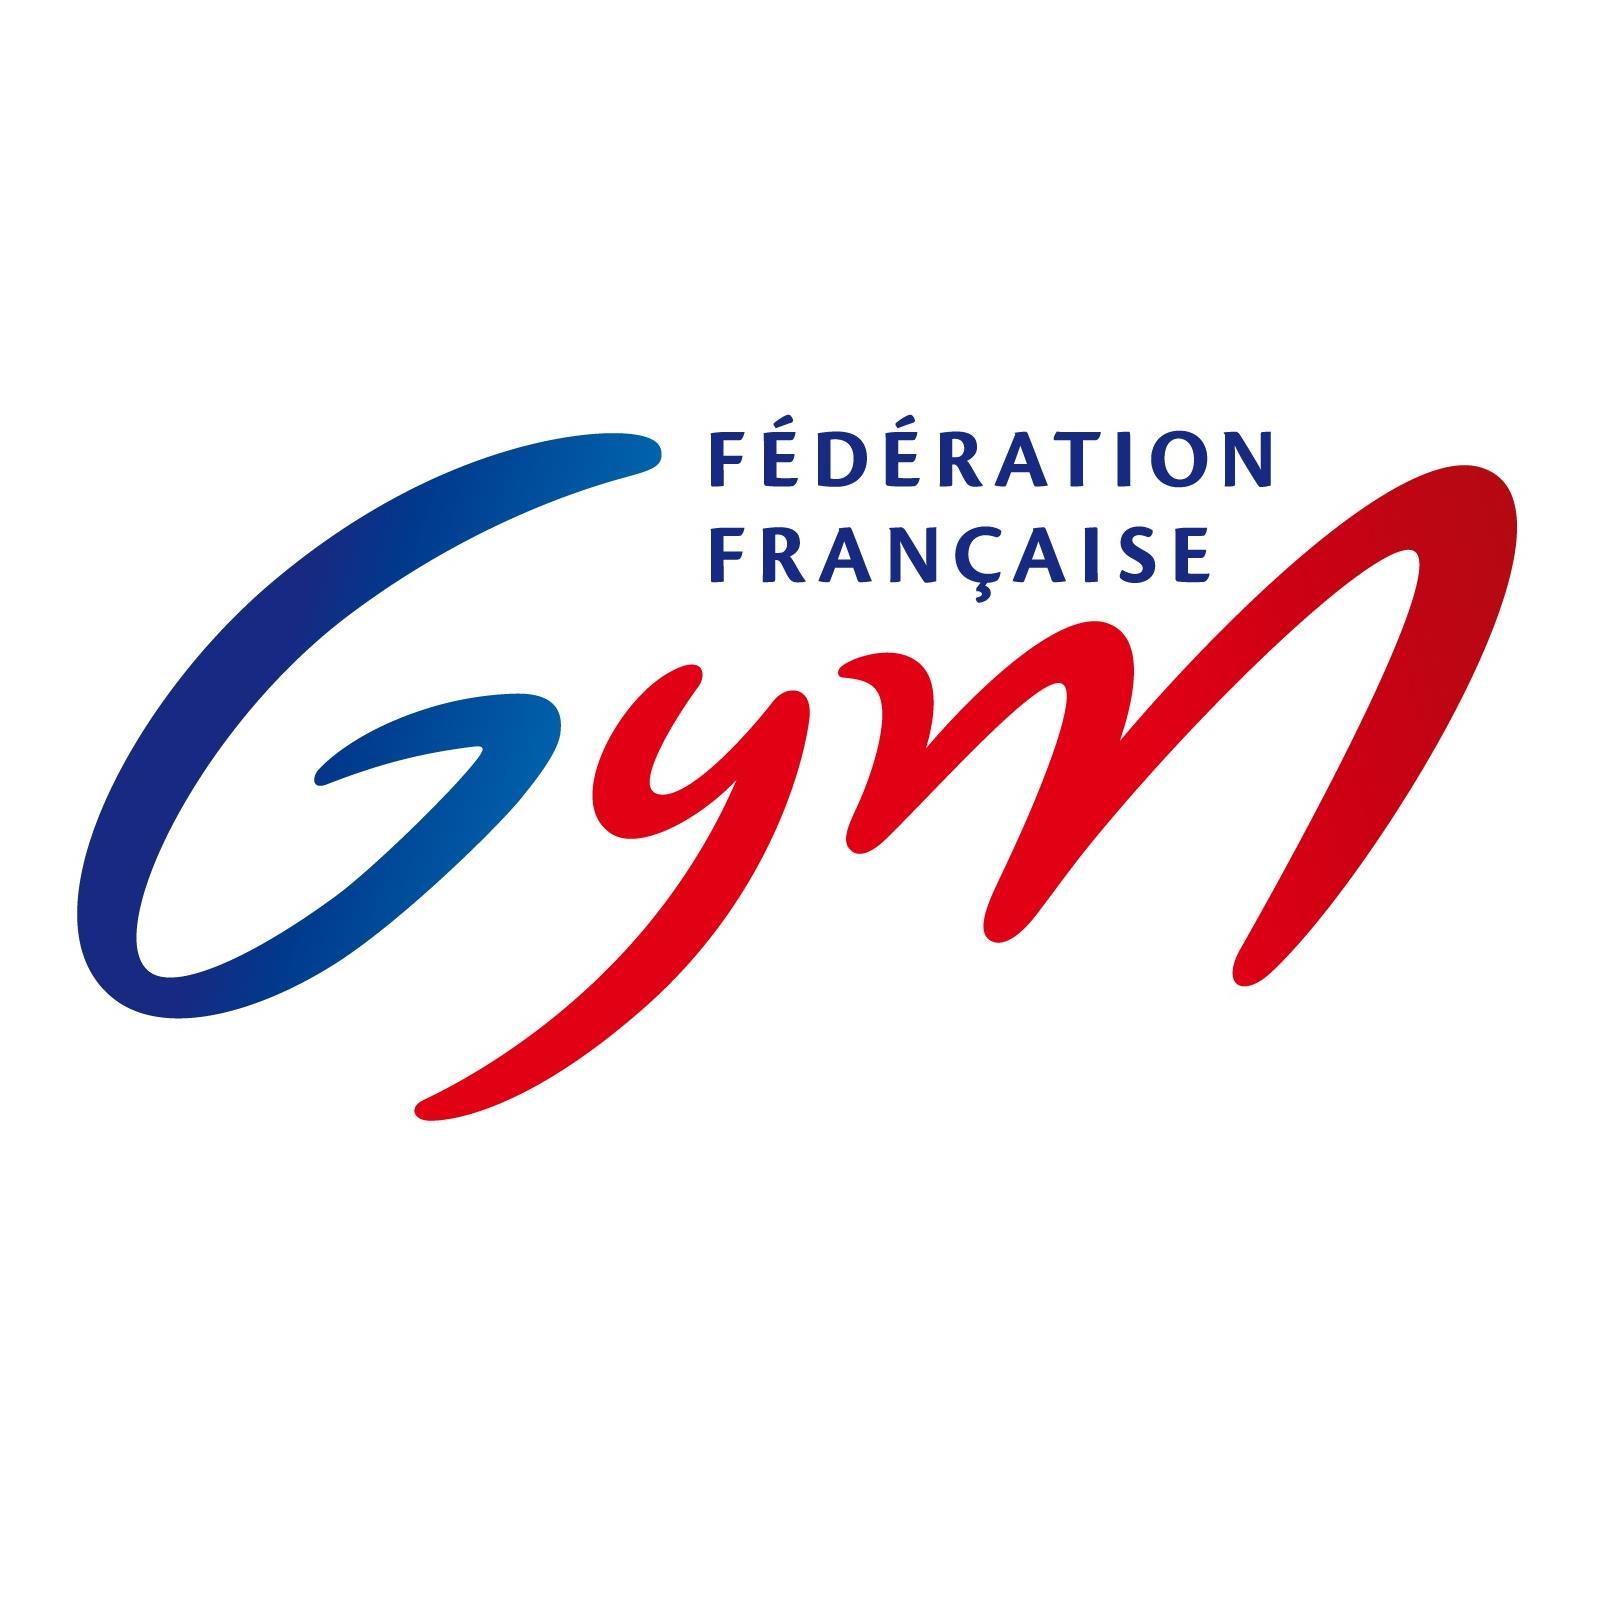 logo ffgym